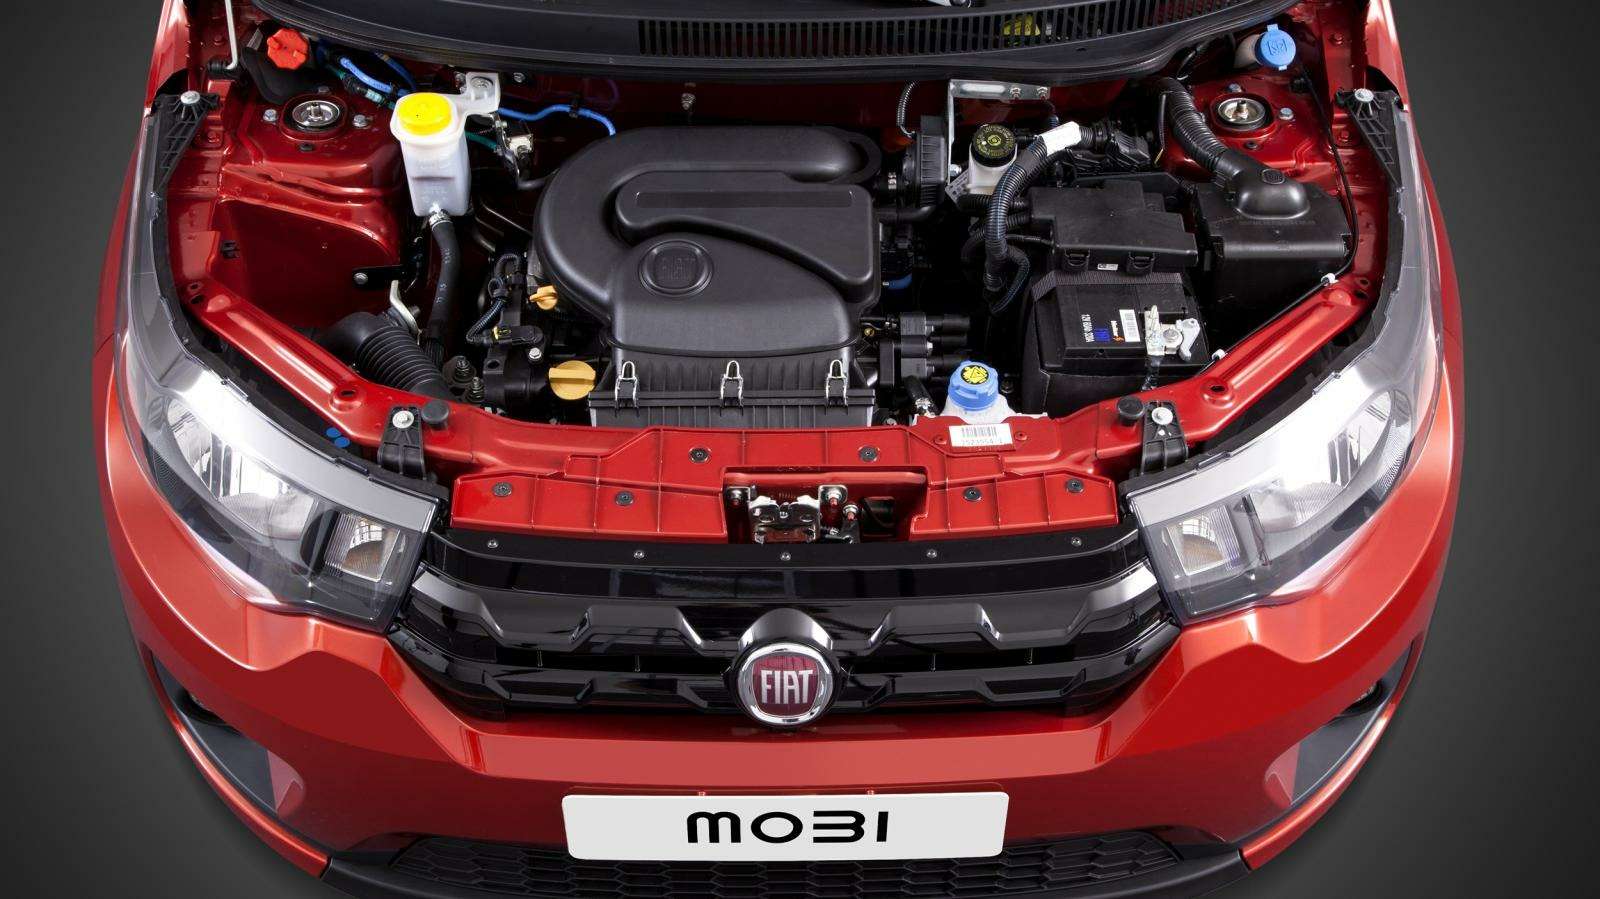 Fiat Mobi — дешево, сердито, по-бразильски — фото 575787